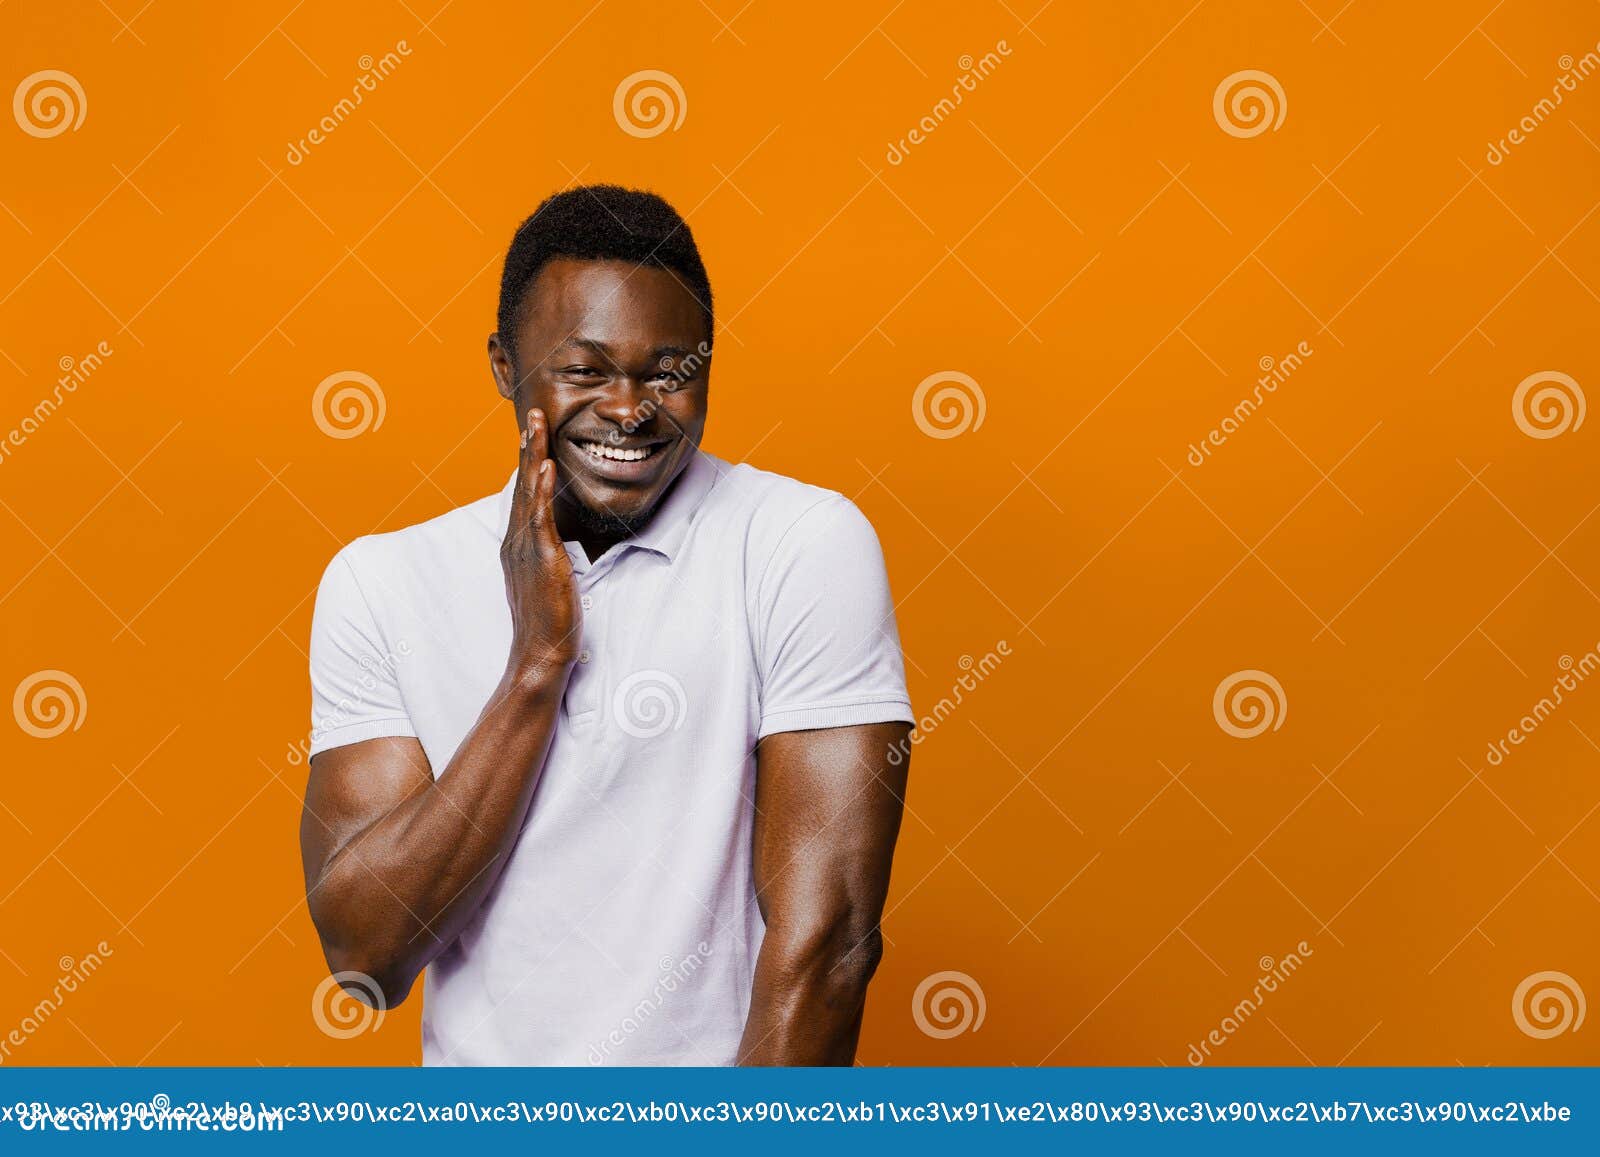 Funny Black Man Jokes and Smiles on Orange Background. Big Discount for  Customers. Smiley People Lifestyle Stock Image - Image of joyful,  tolerance: 222055147